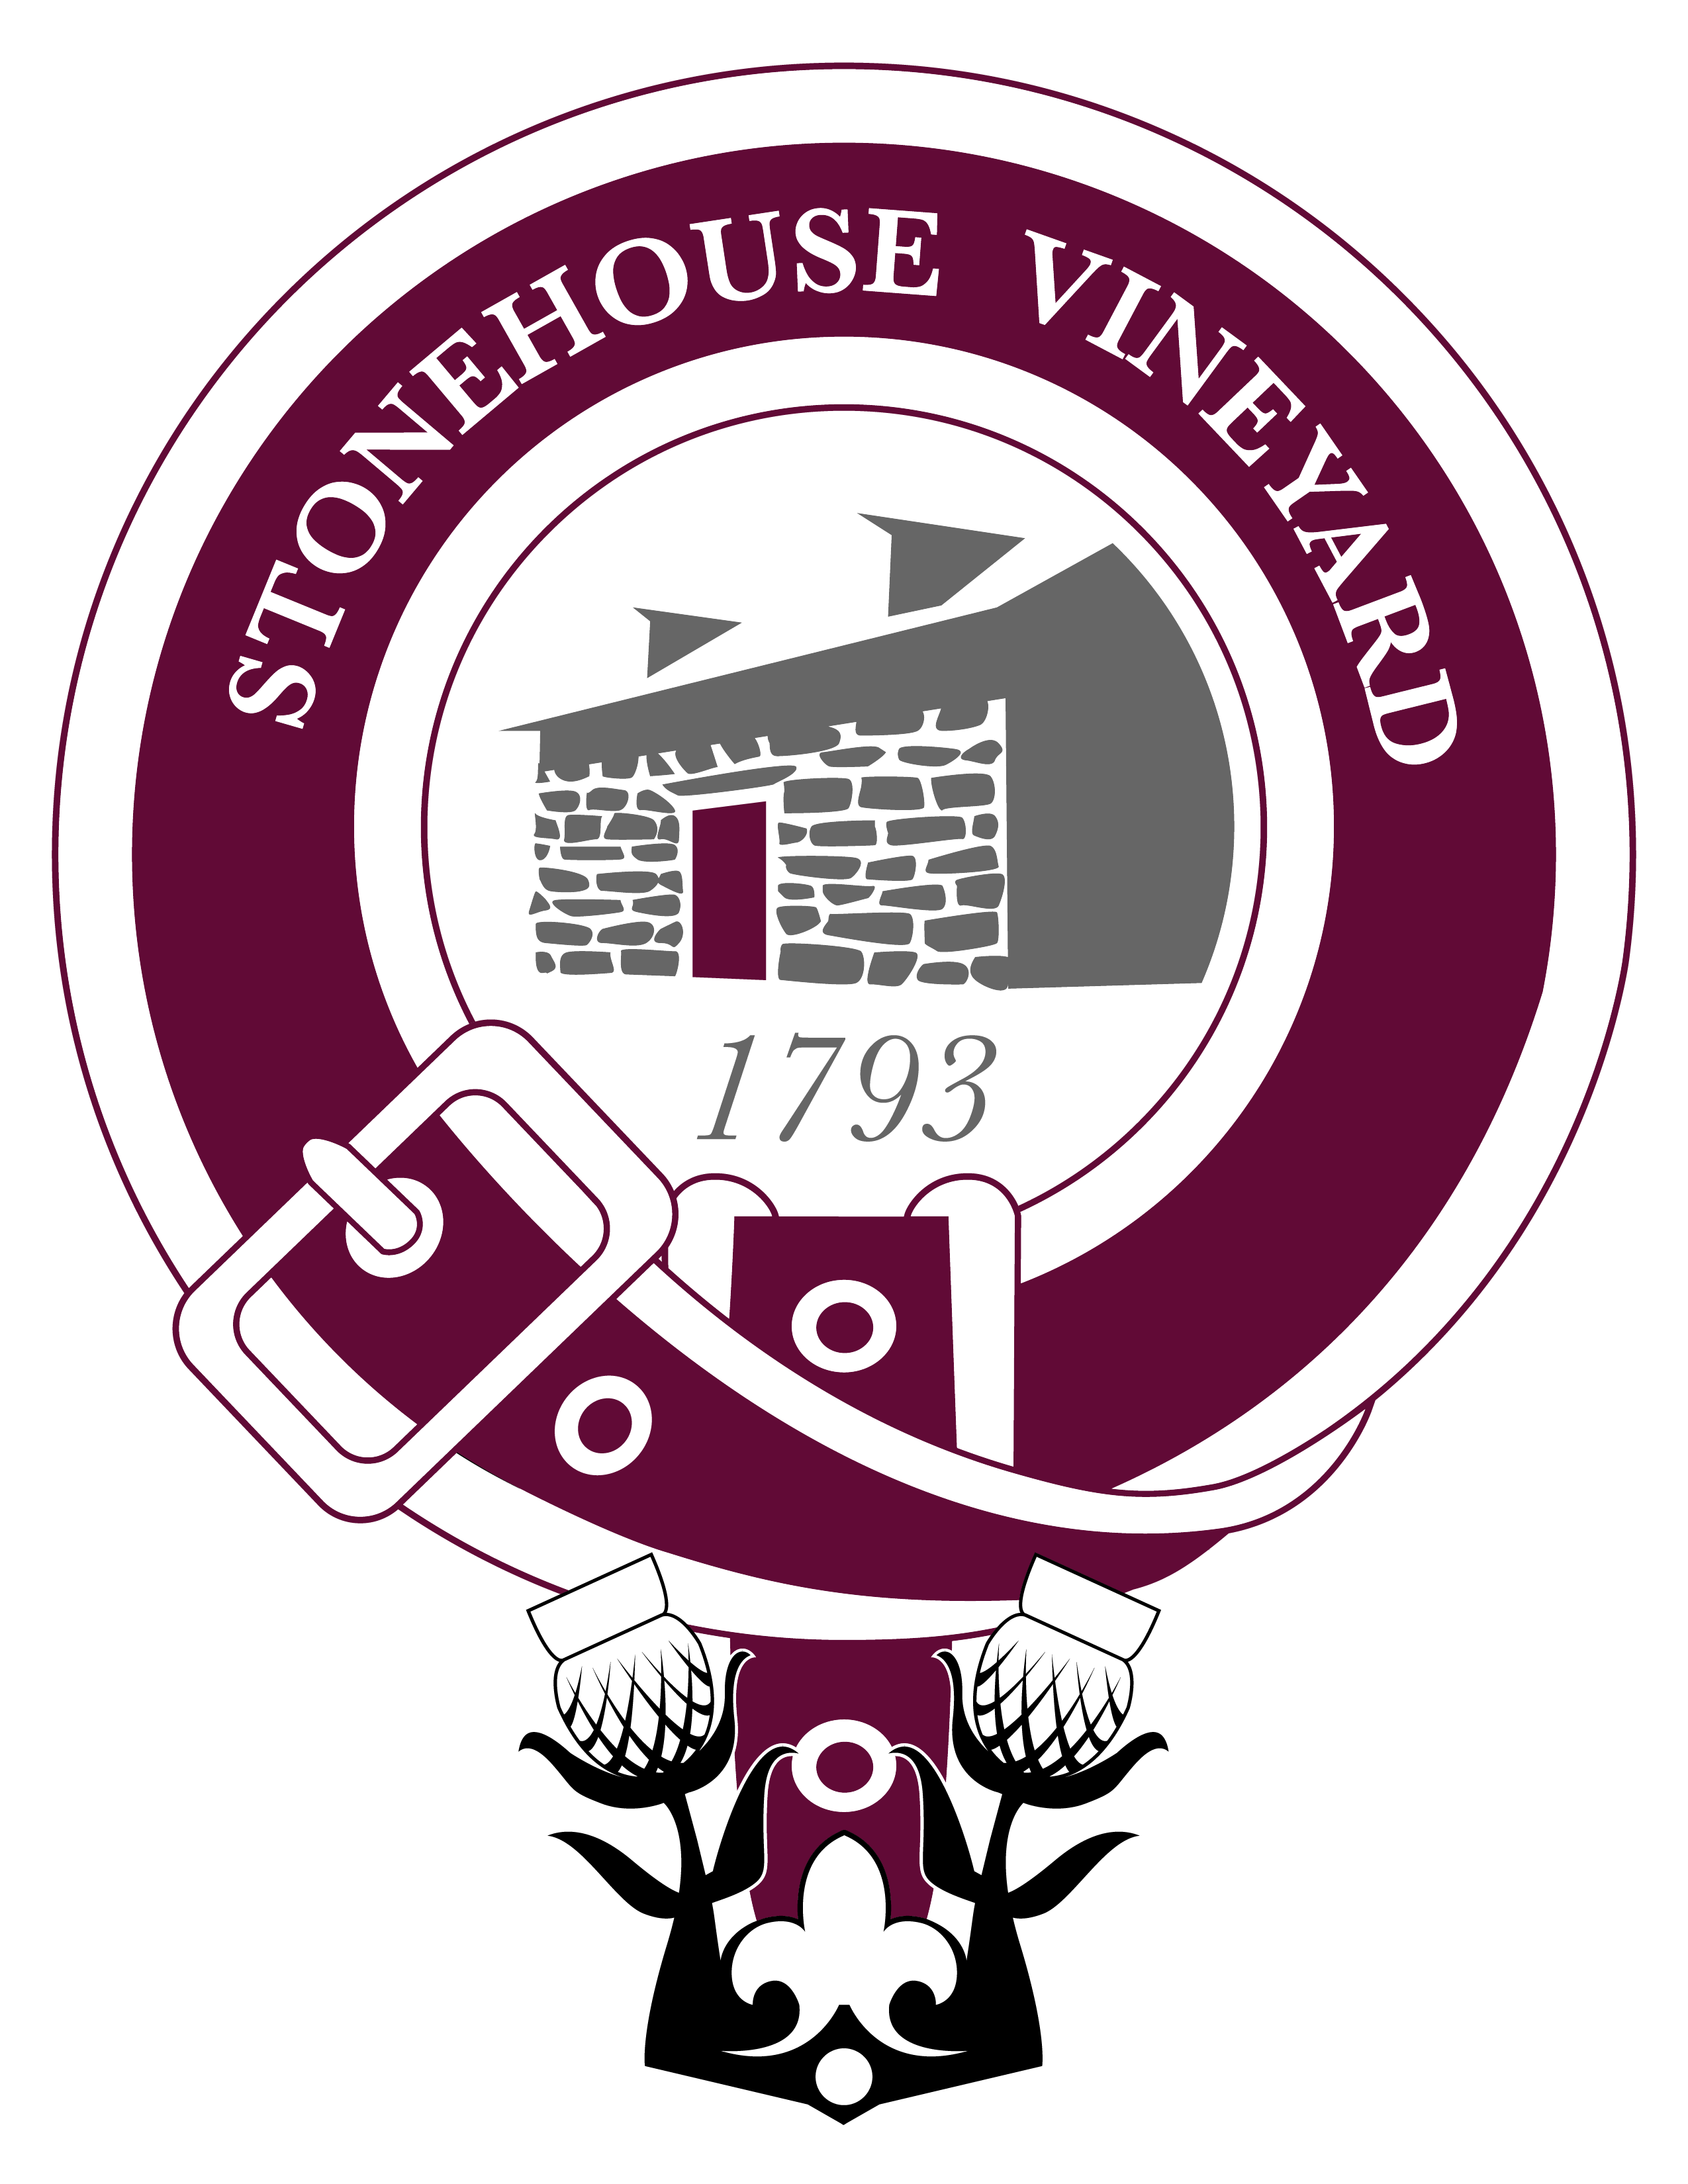 Stonehouse Vineyard Gift Certificate $25